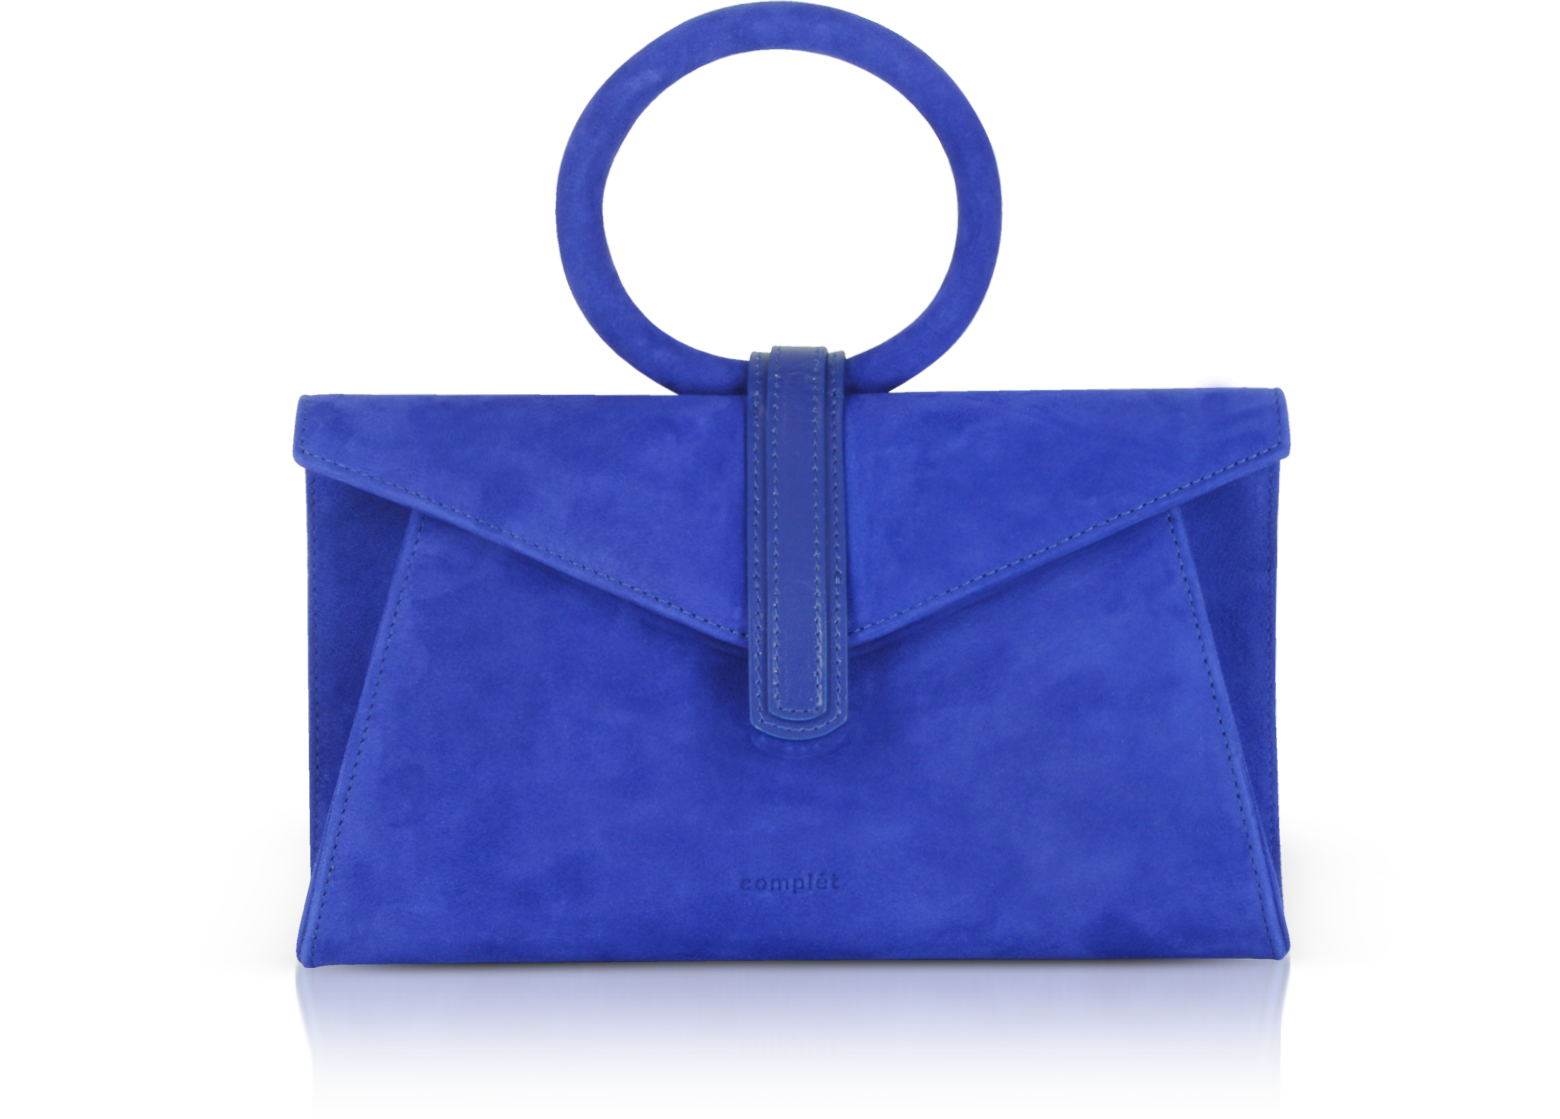 royal blue suede clutch bag